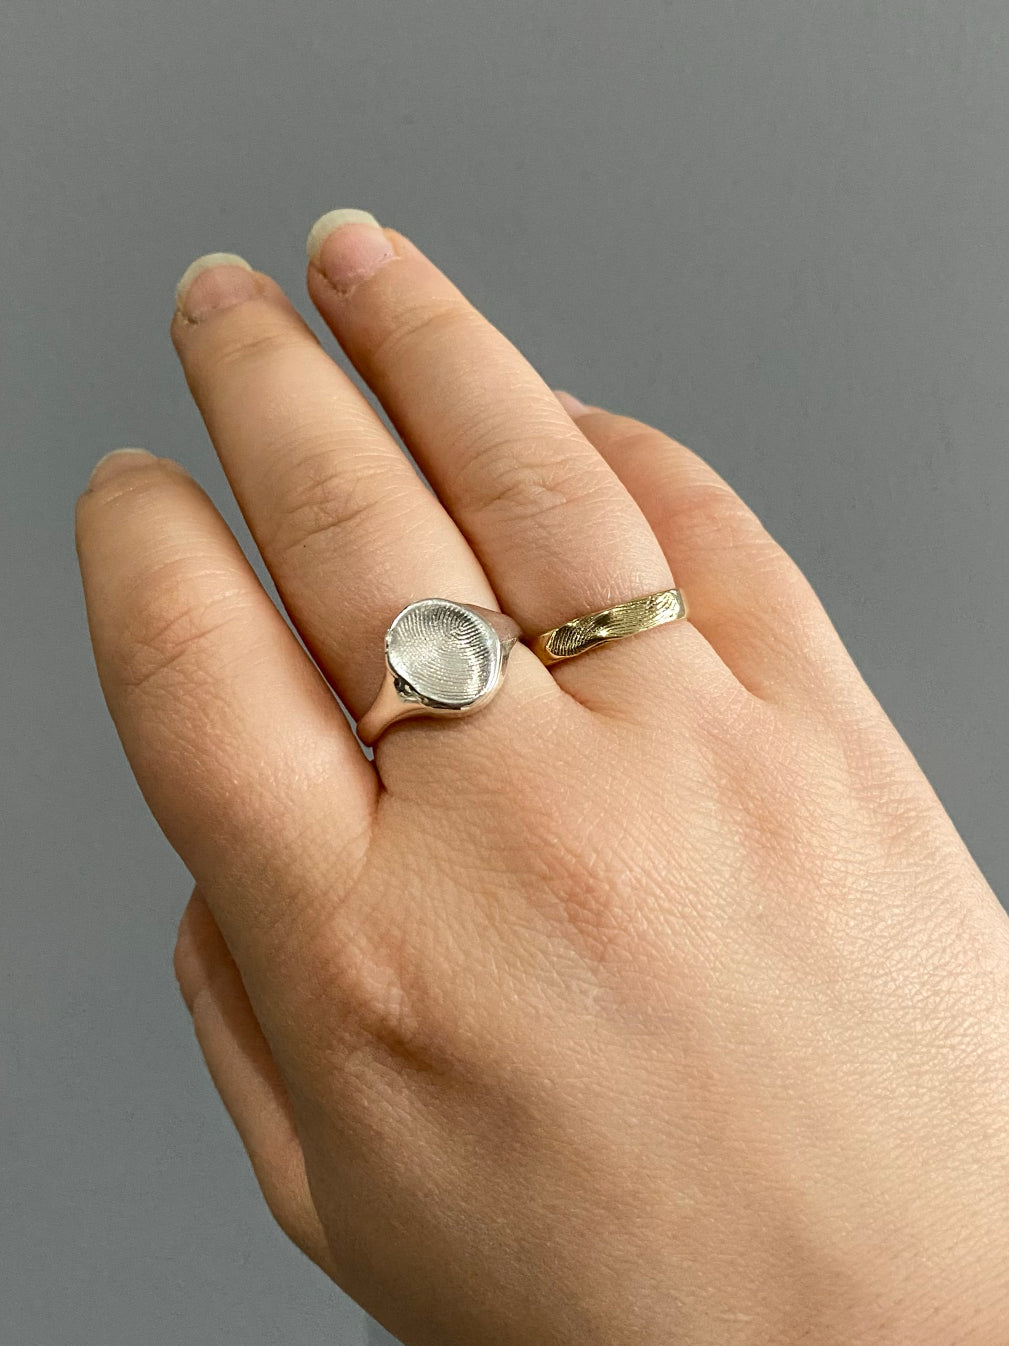 Hand with silver fingerprint signet ring and gold fingerprint band ring